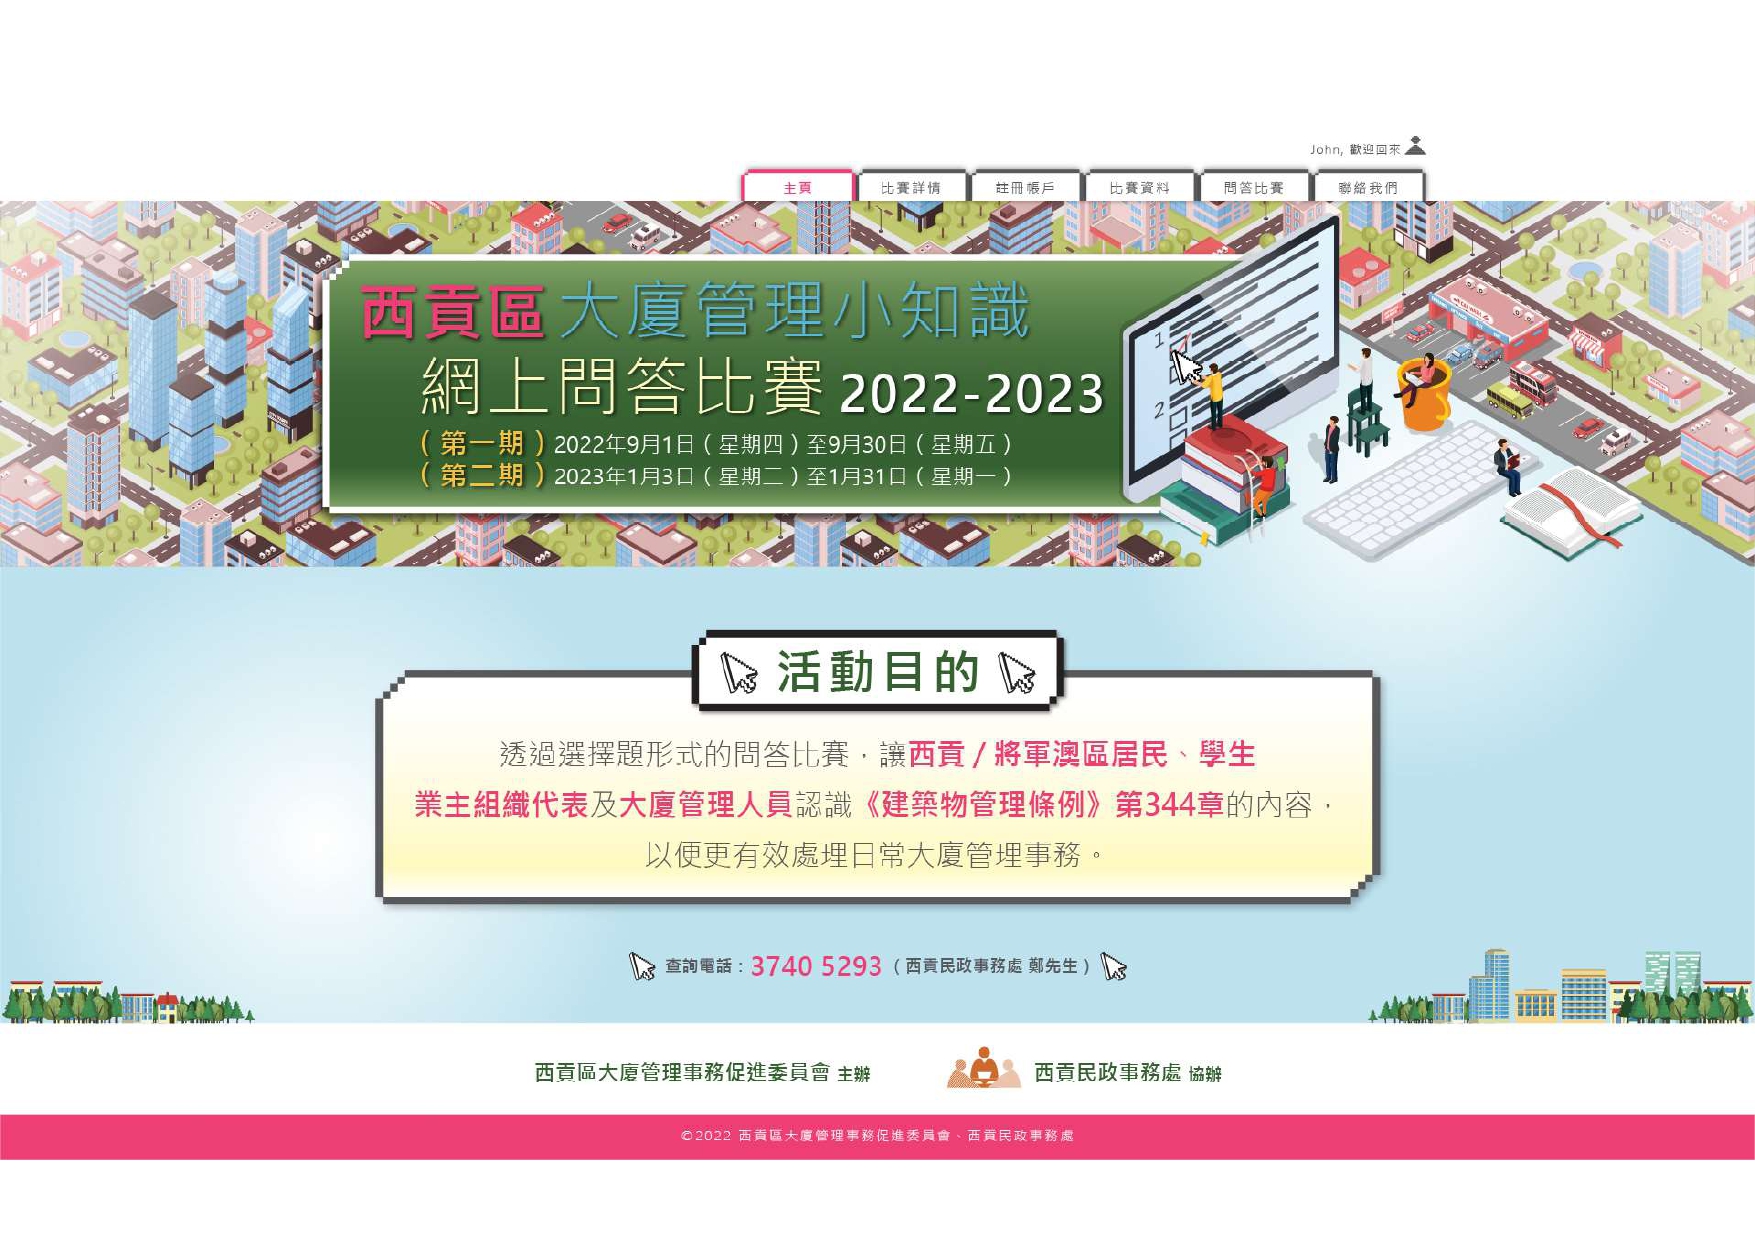 Sai Kung District Building Management Online Quiz Competition 2022-2023
(1st Round)